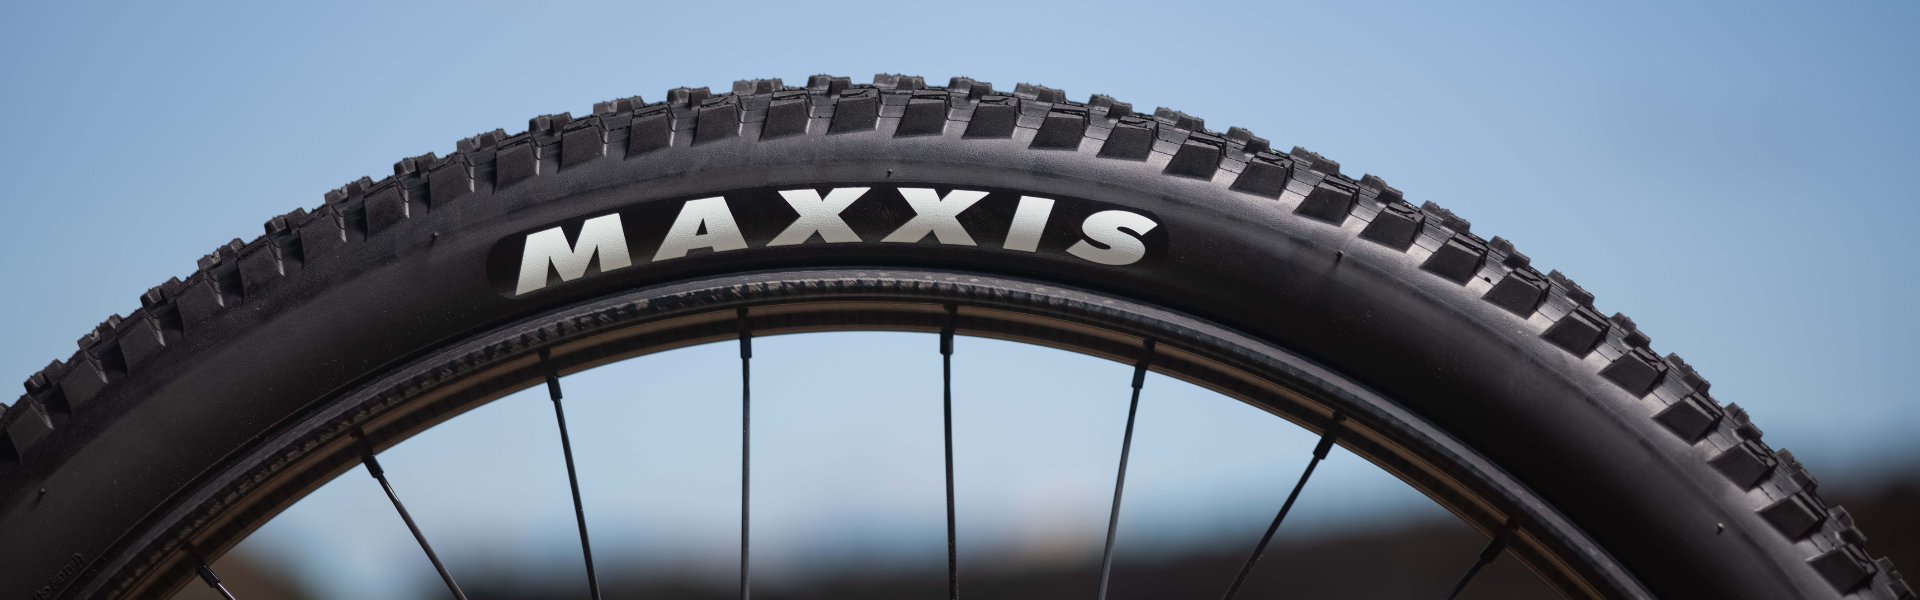 Maxxis Ikon Tubeless 29´´ x 2.35 MTB Tyre, Silver